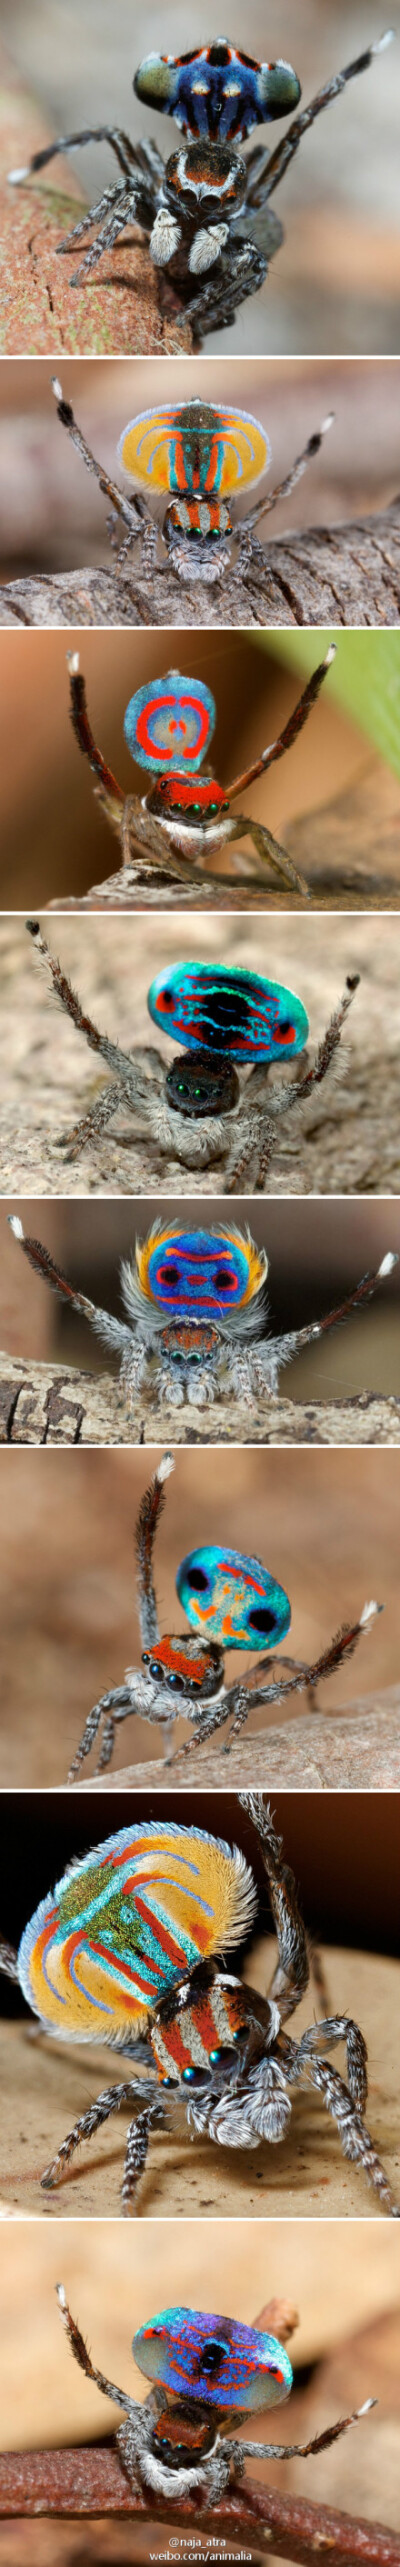 @naja_atra 澳大利亚孔雀跳蛛（Maratus sp）Australian peacock spider